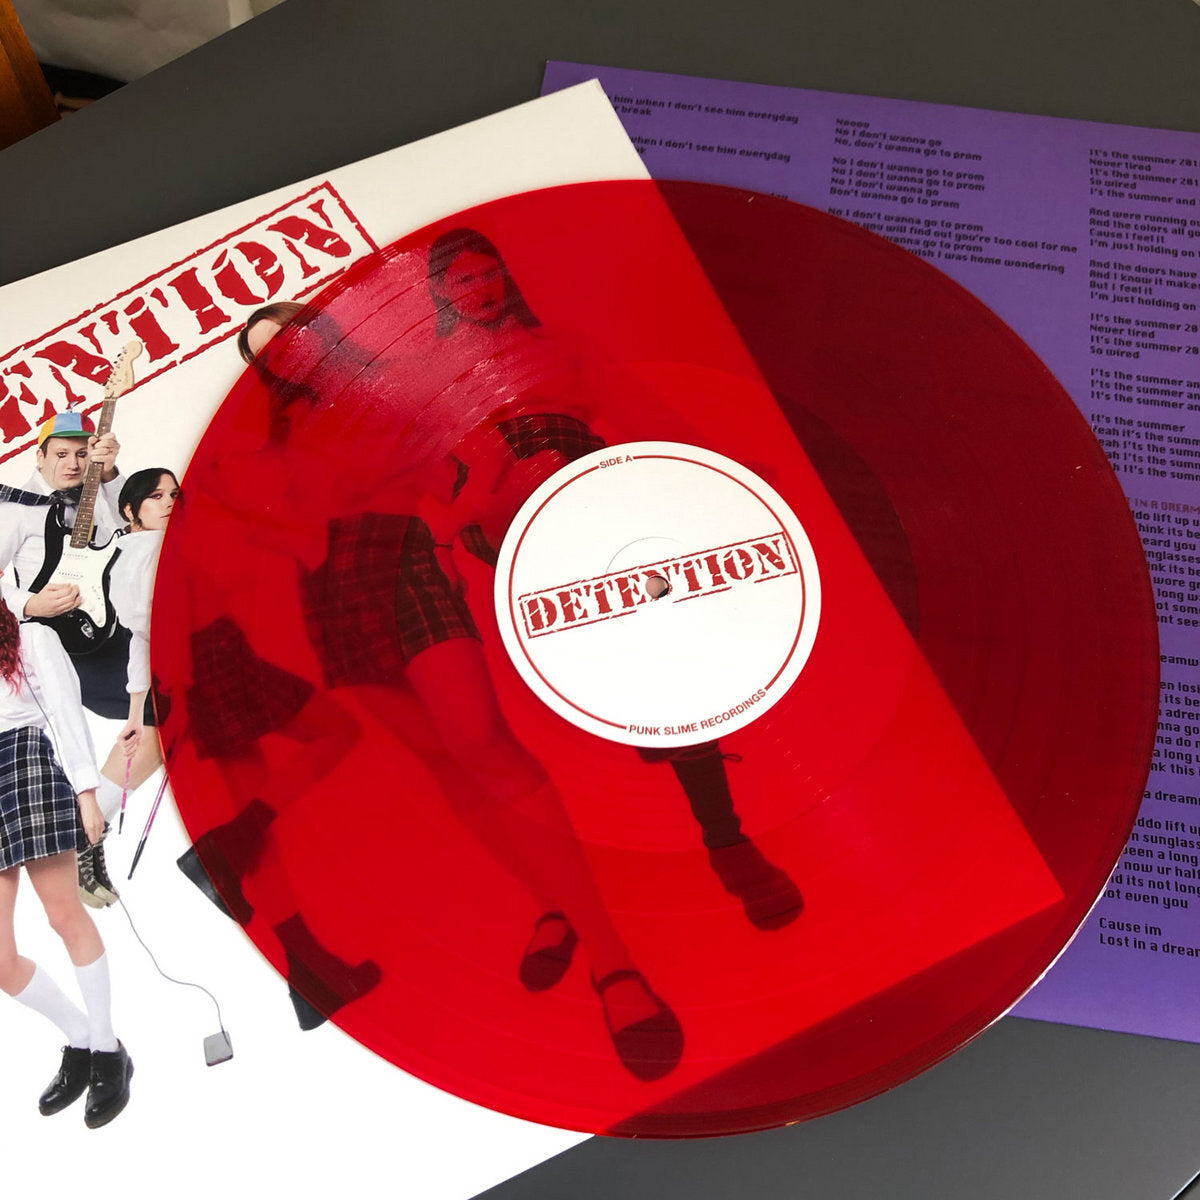 ShitKid - [DETENTION] (transparent red vinyl)